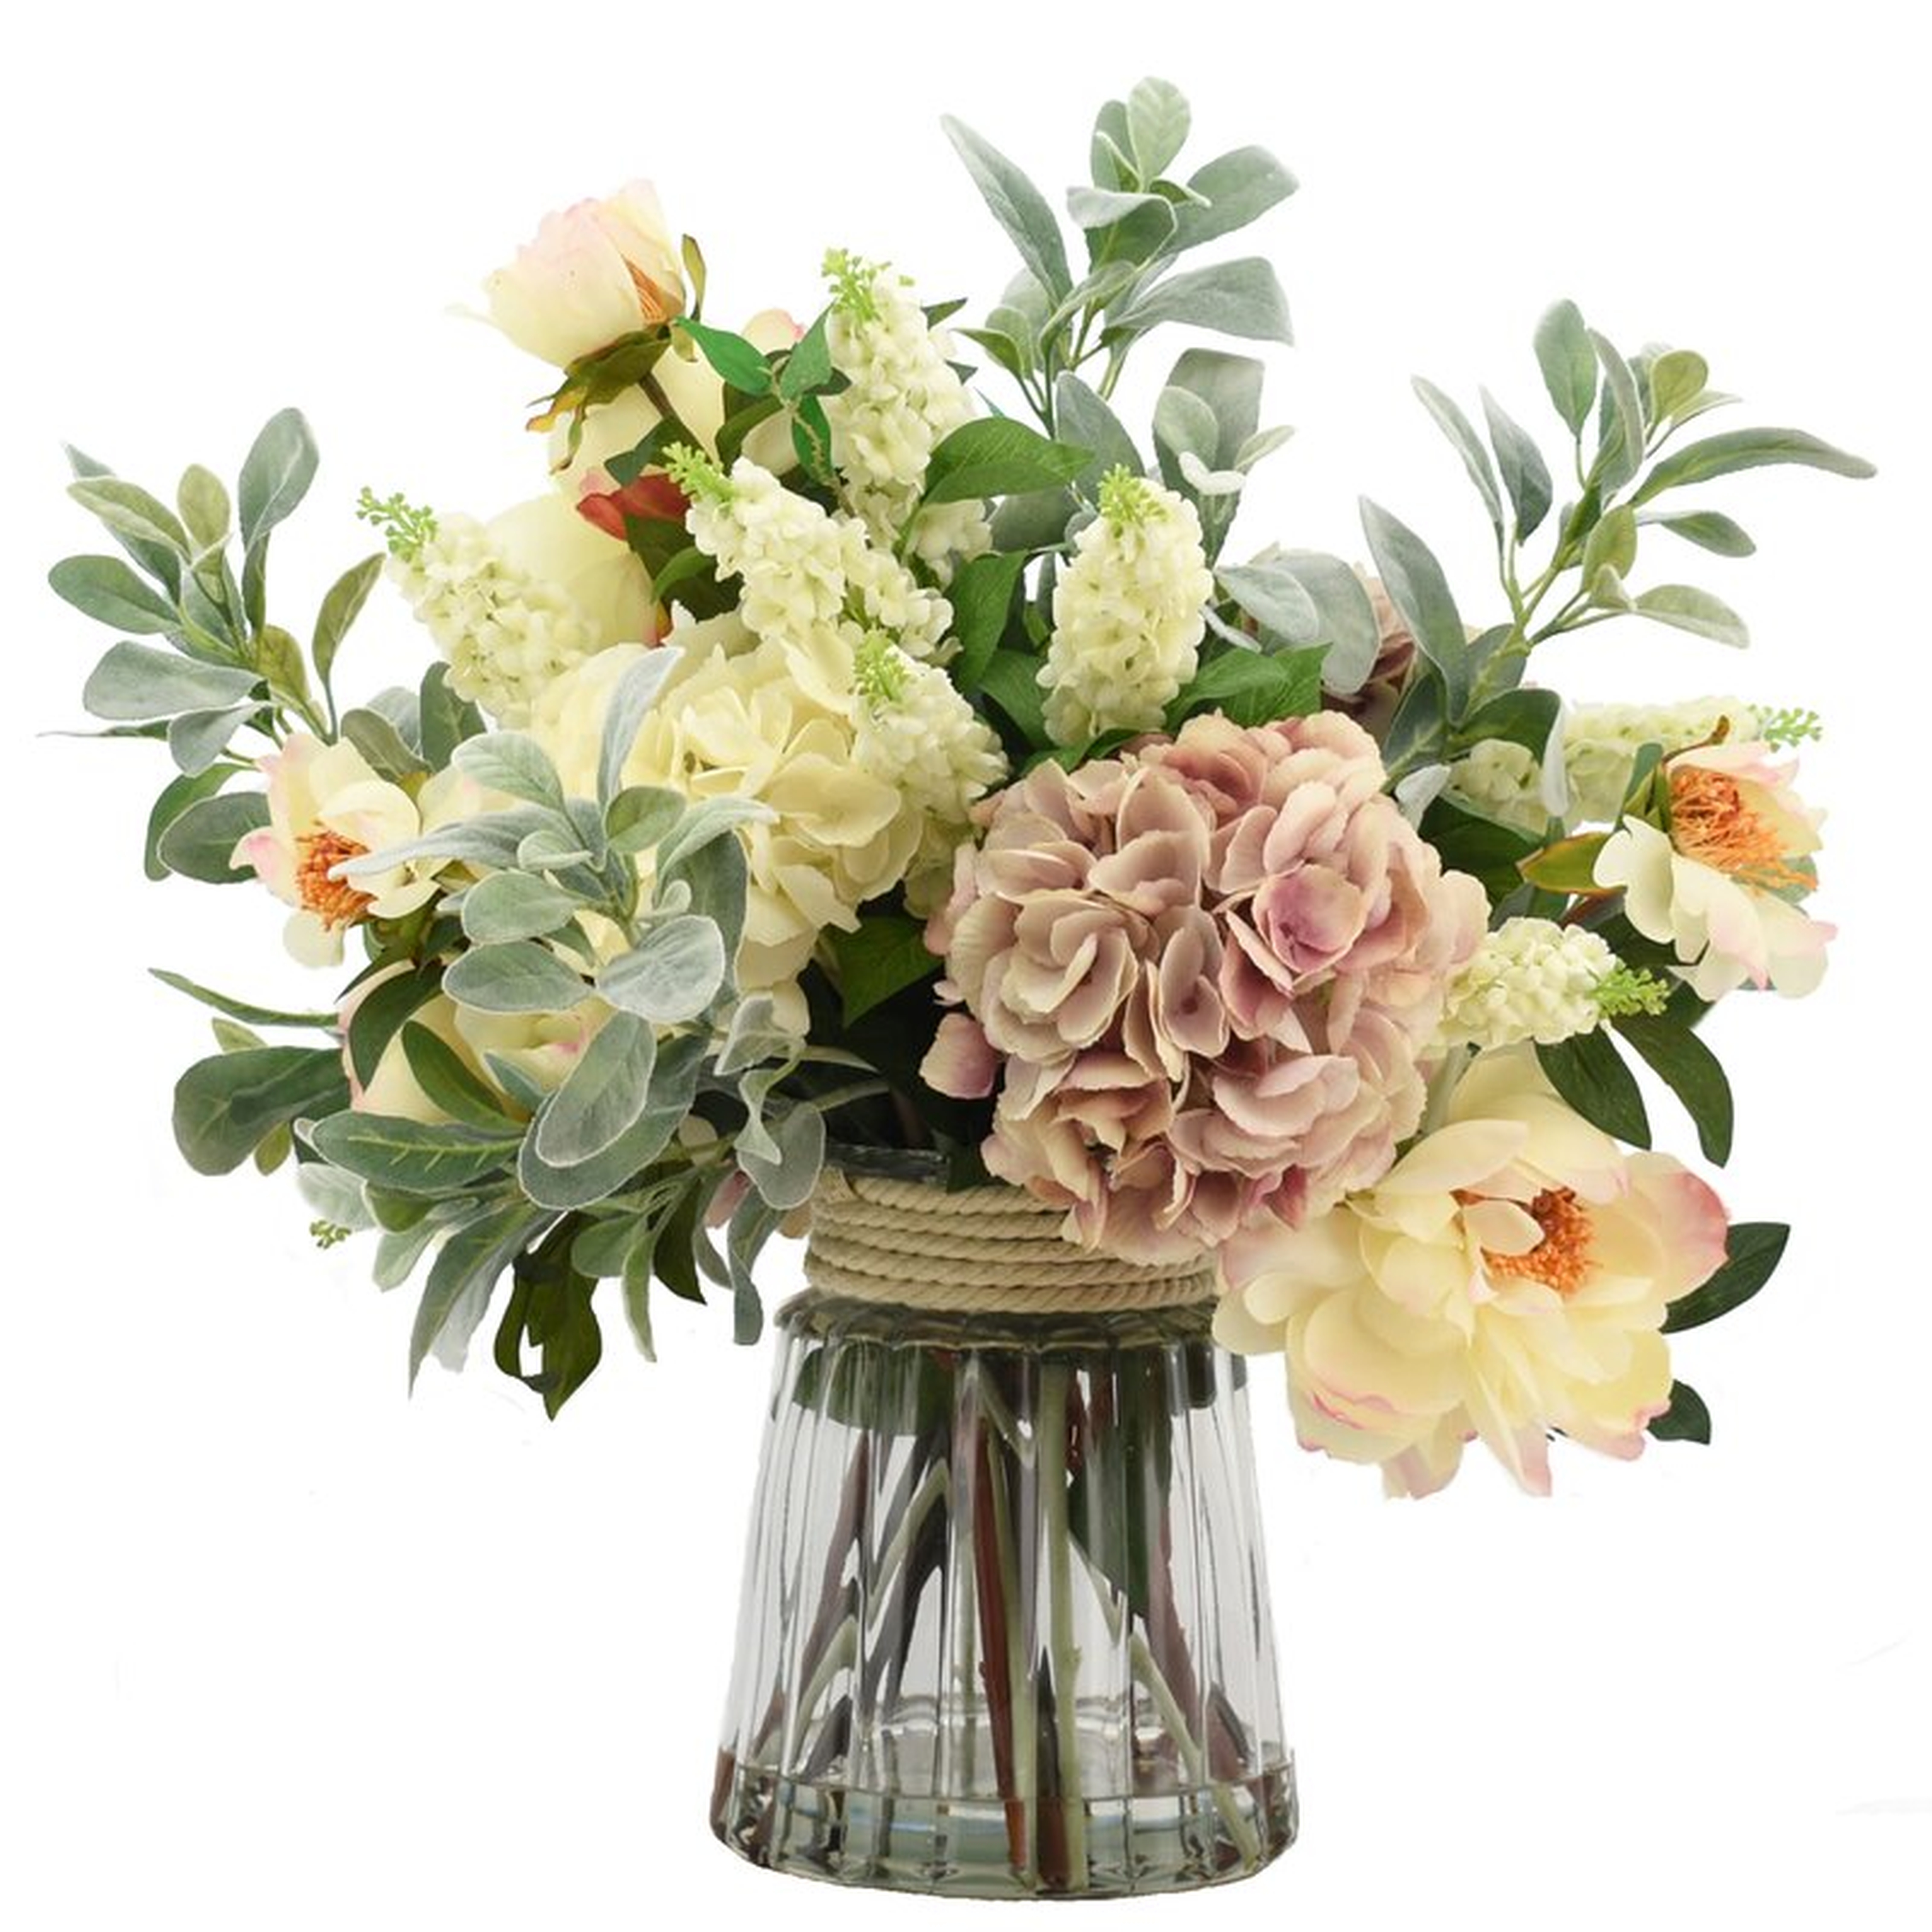 Mixed Floral Arrangement in Glass Vase - Perigold